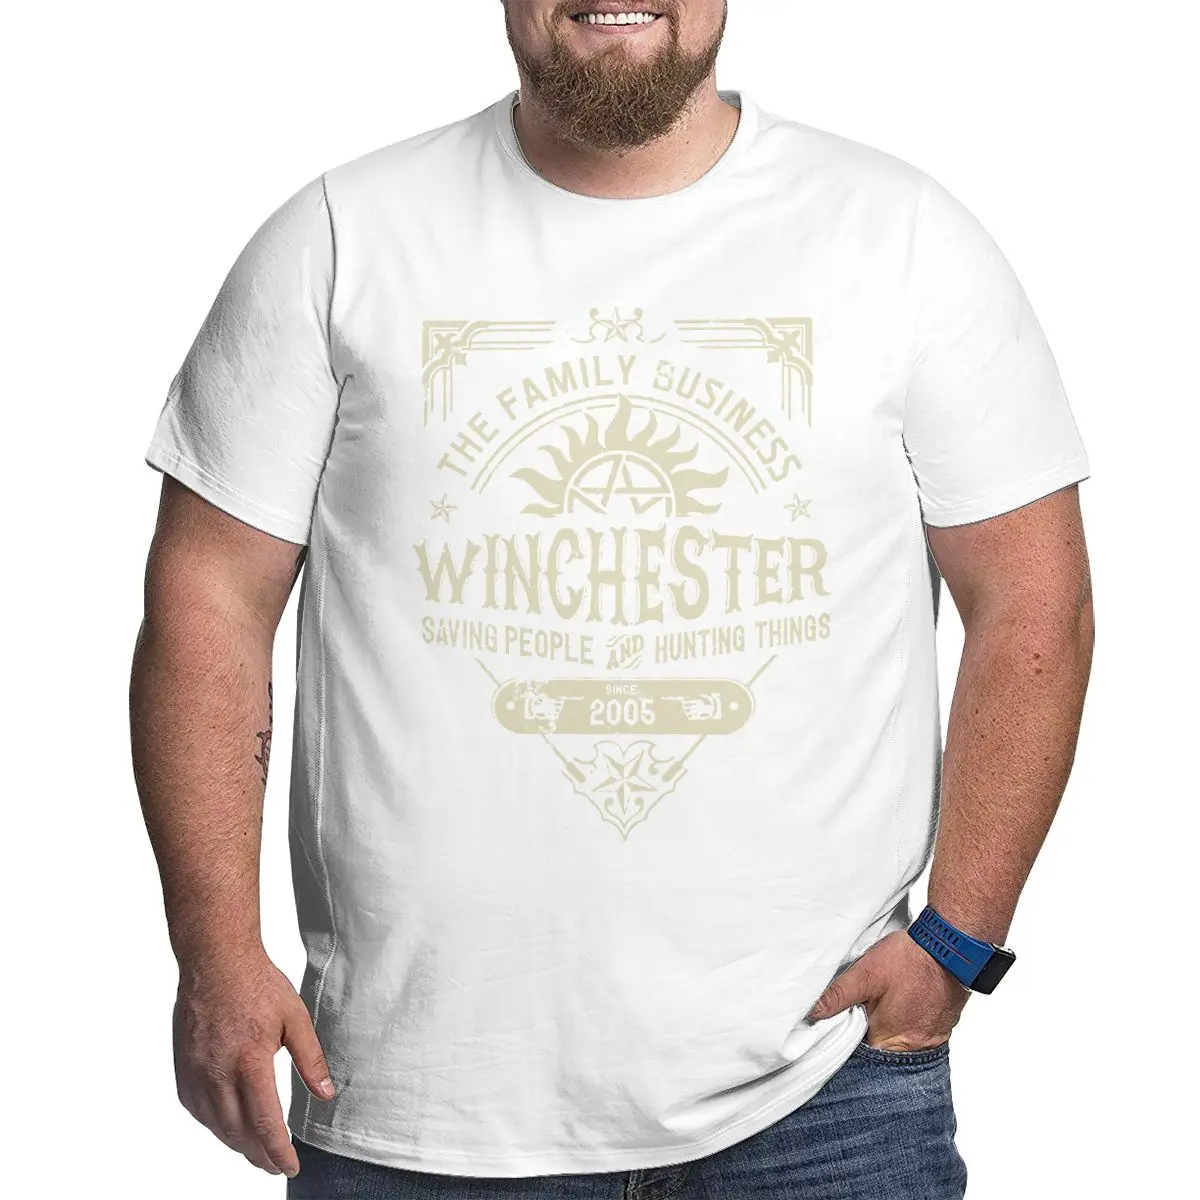 https://ae01.alicdn.com/kf/H028c7f129a004bec977fa492ba9c4138a/Hip-Hop-Supernatural-Winchester-T-Shirts-for-Men-Vintage-T-Shirts-Big-Tall-Tee-Shirt-Short.jpg